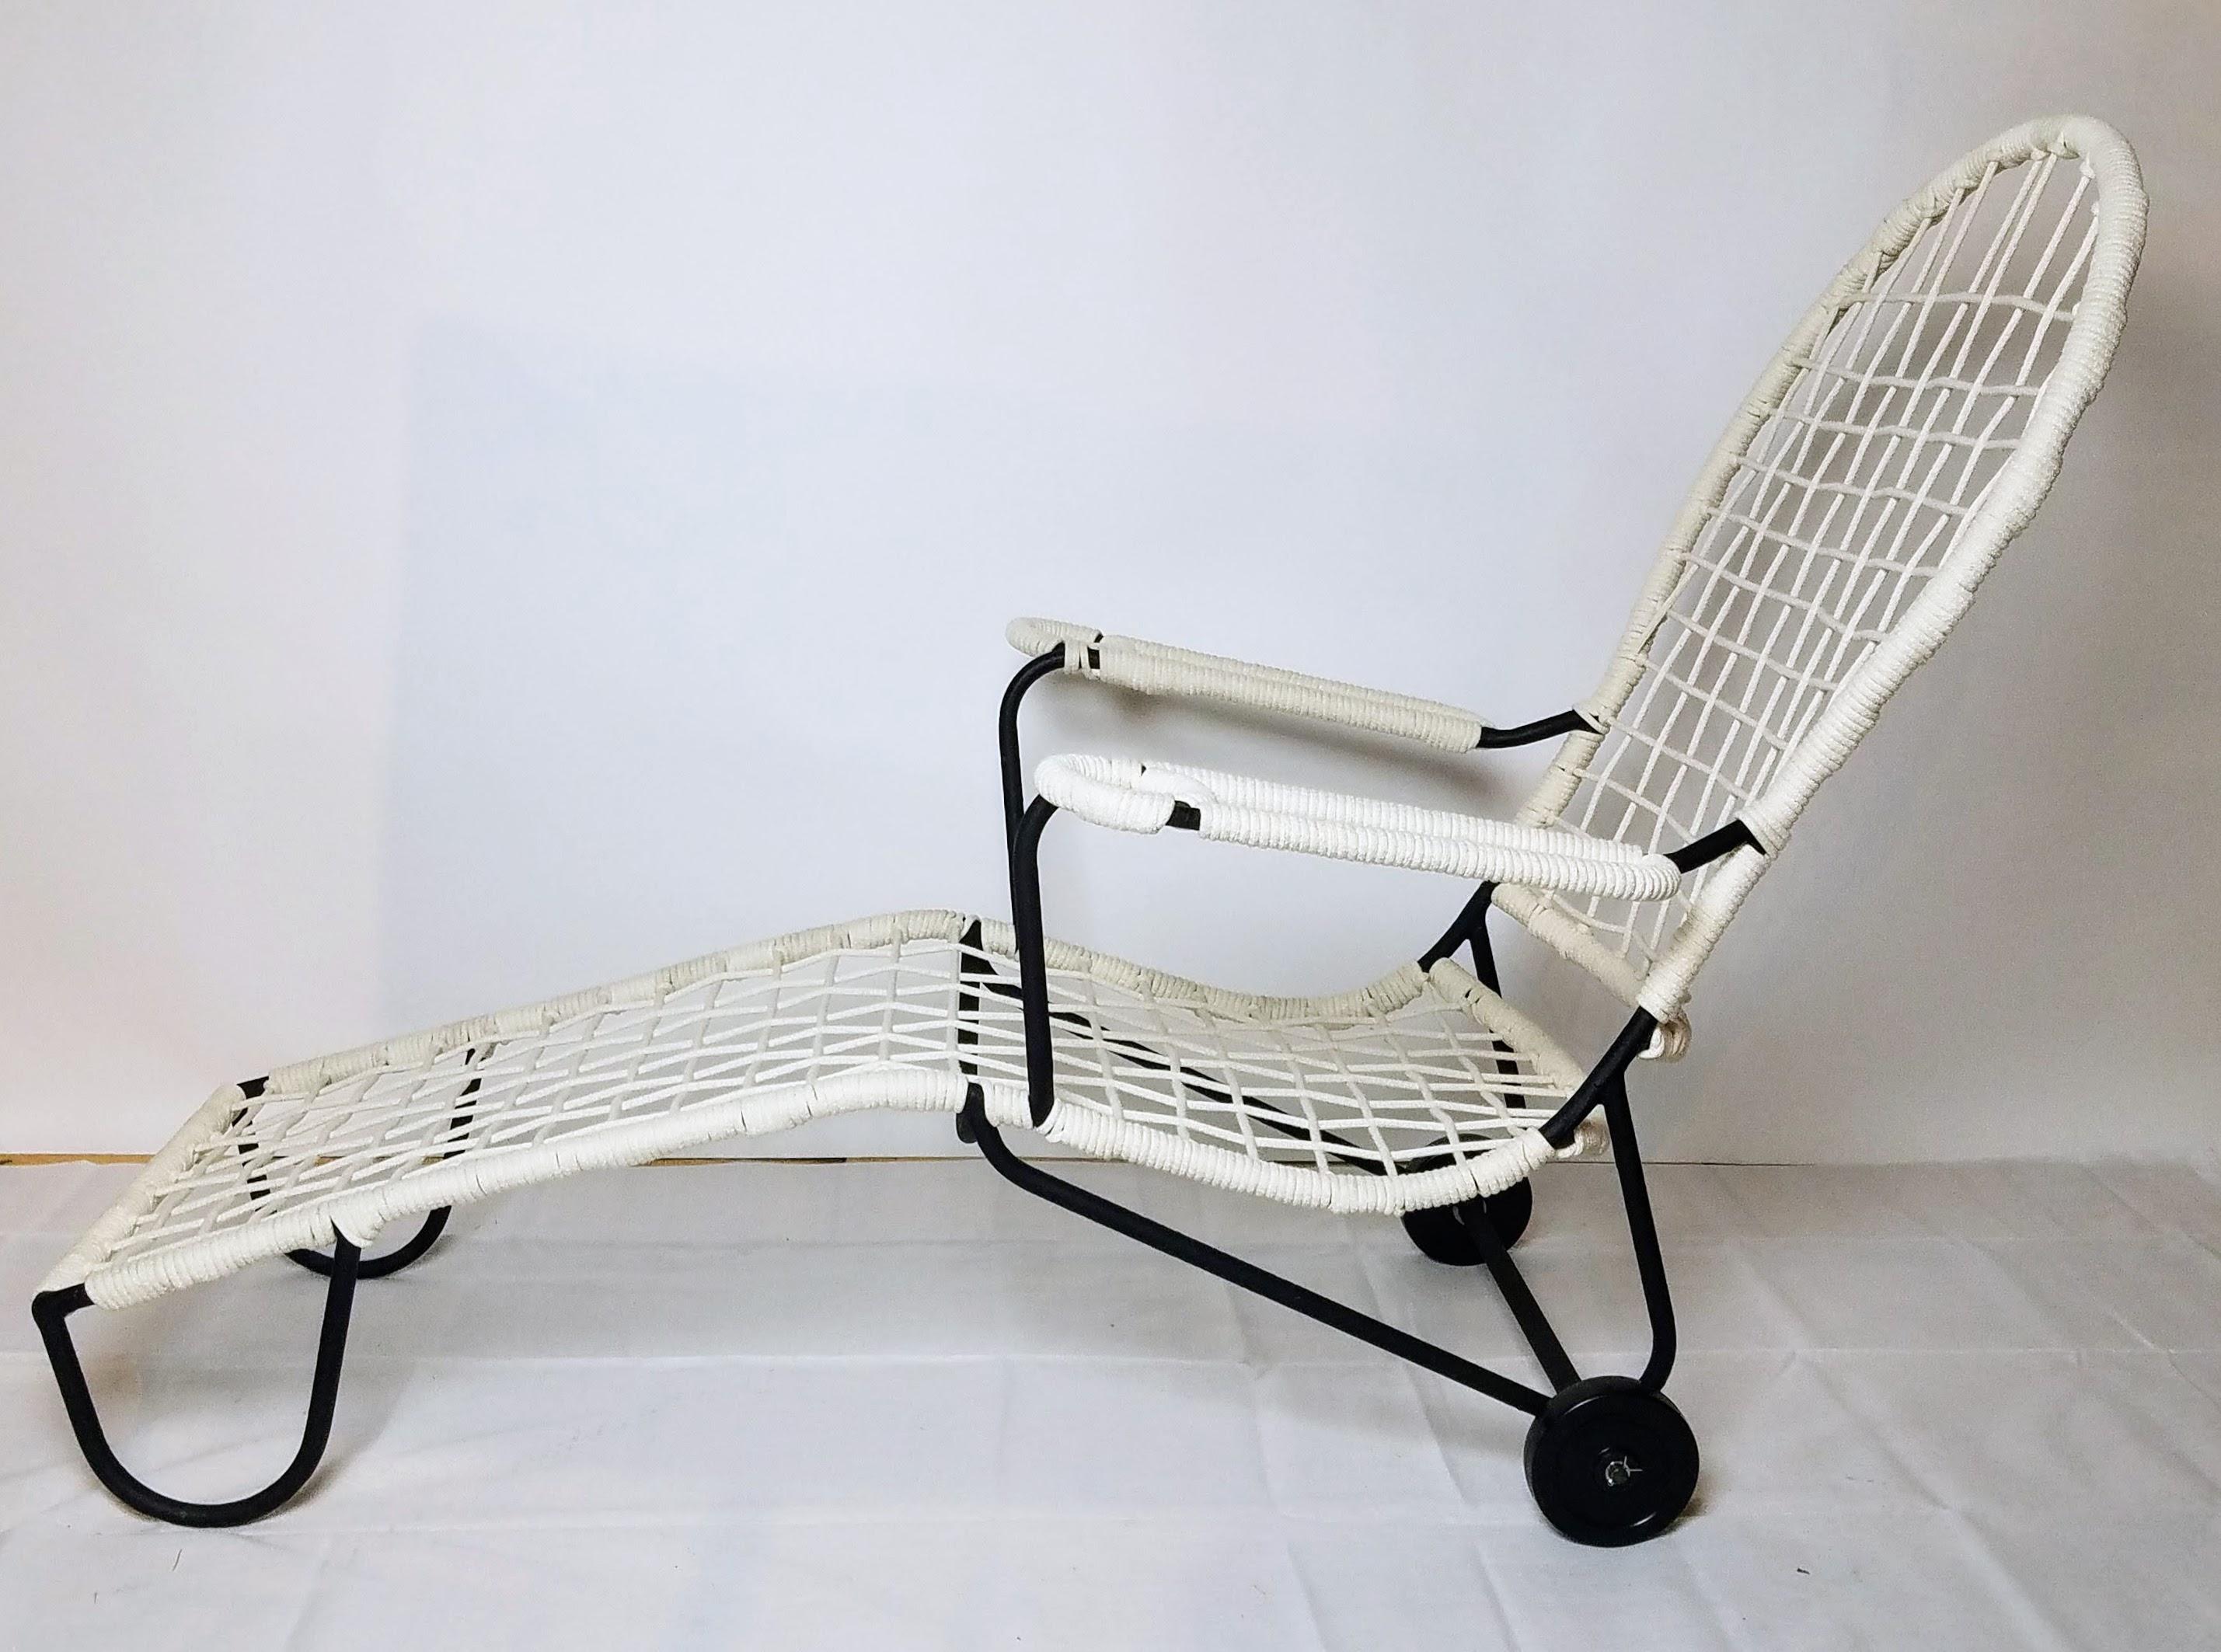 Wylie R. Dallas Texas Roped Iron Furniture Chaise 1940s San Antonio Texas For Sale 1